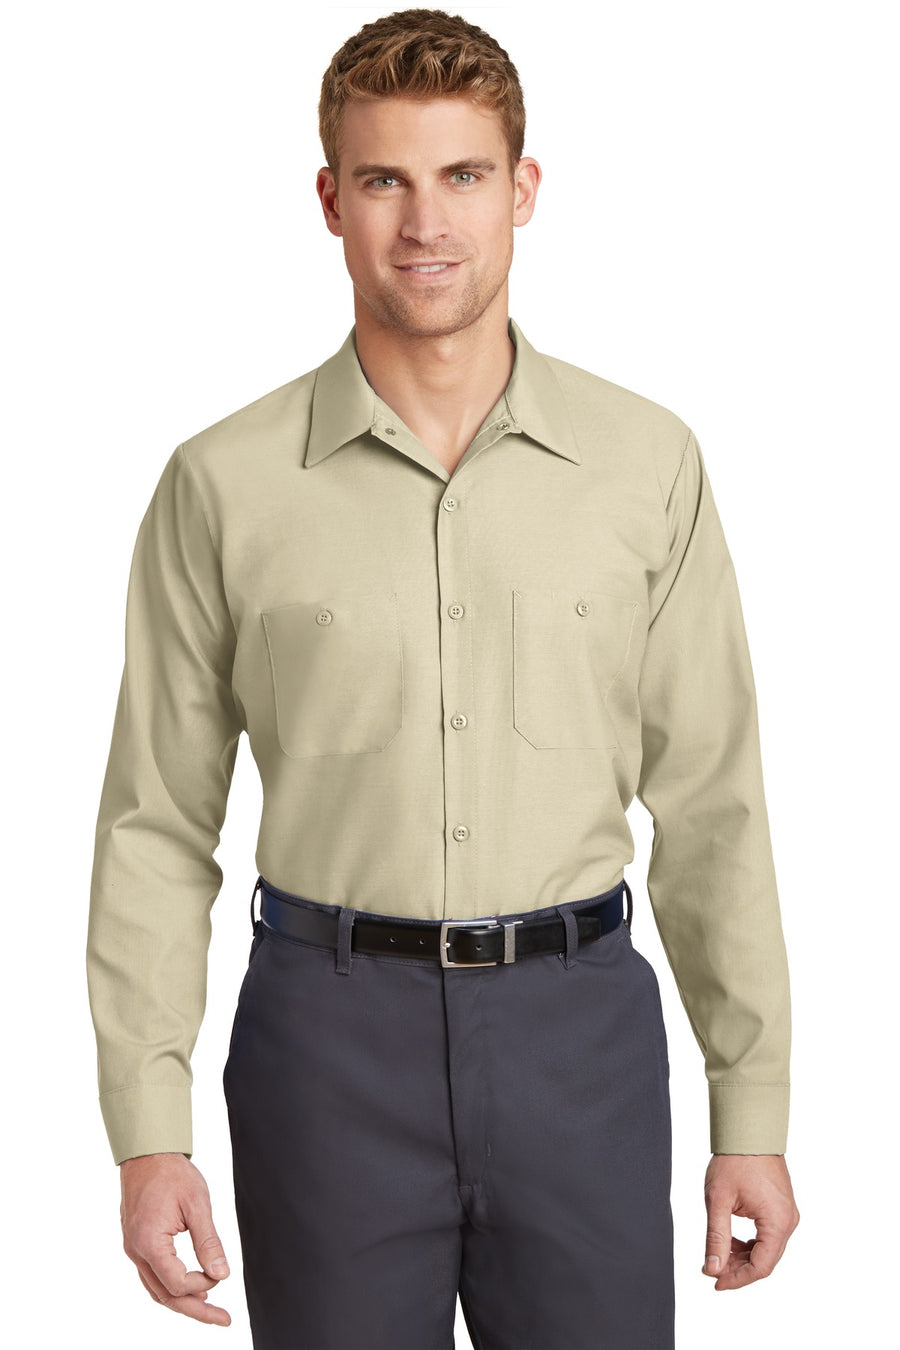 Red Kap Long Size Long Sleeve Industrial Work Shirt.